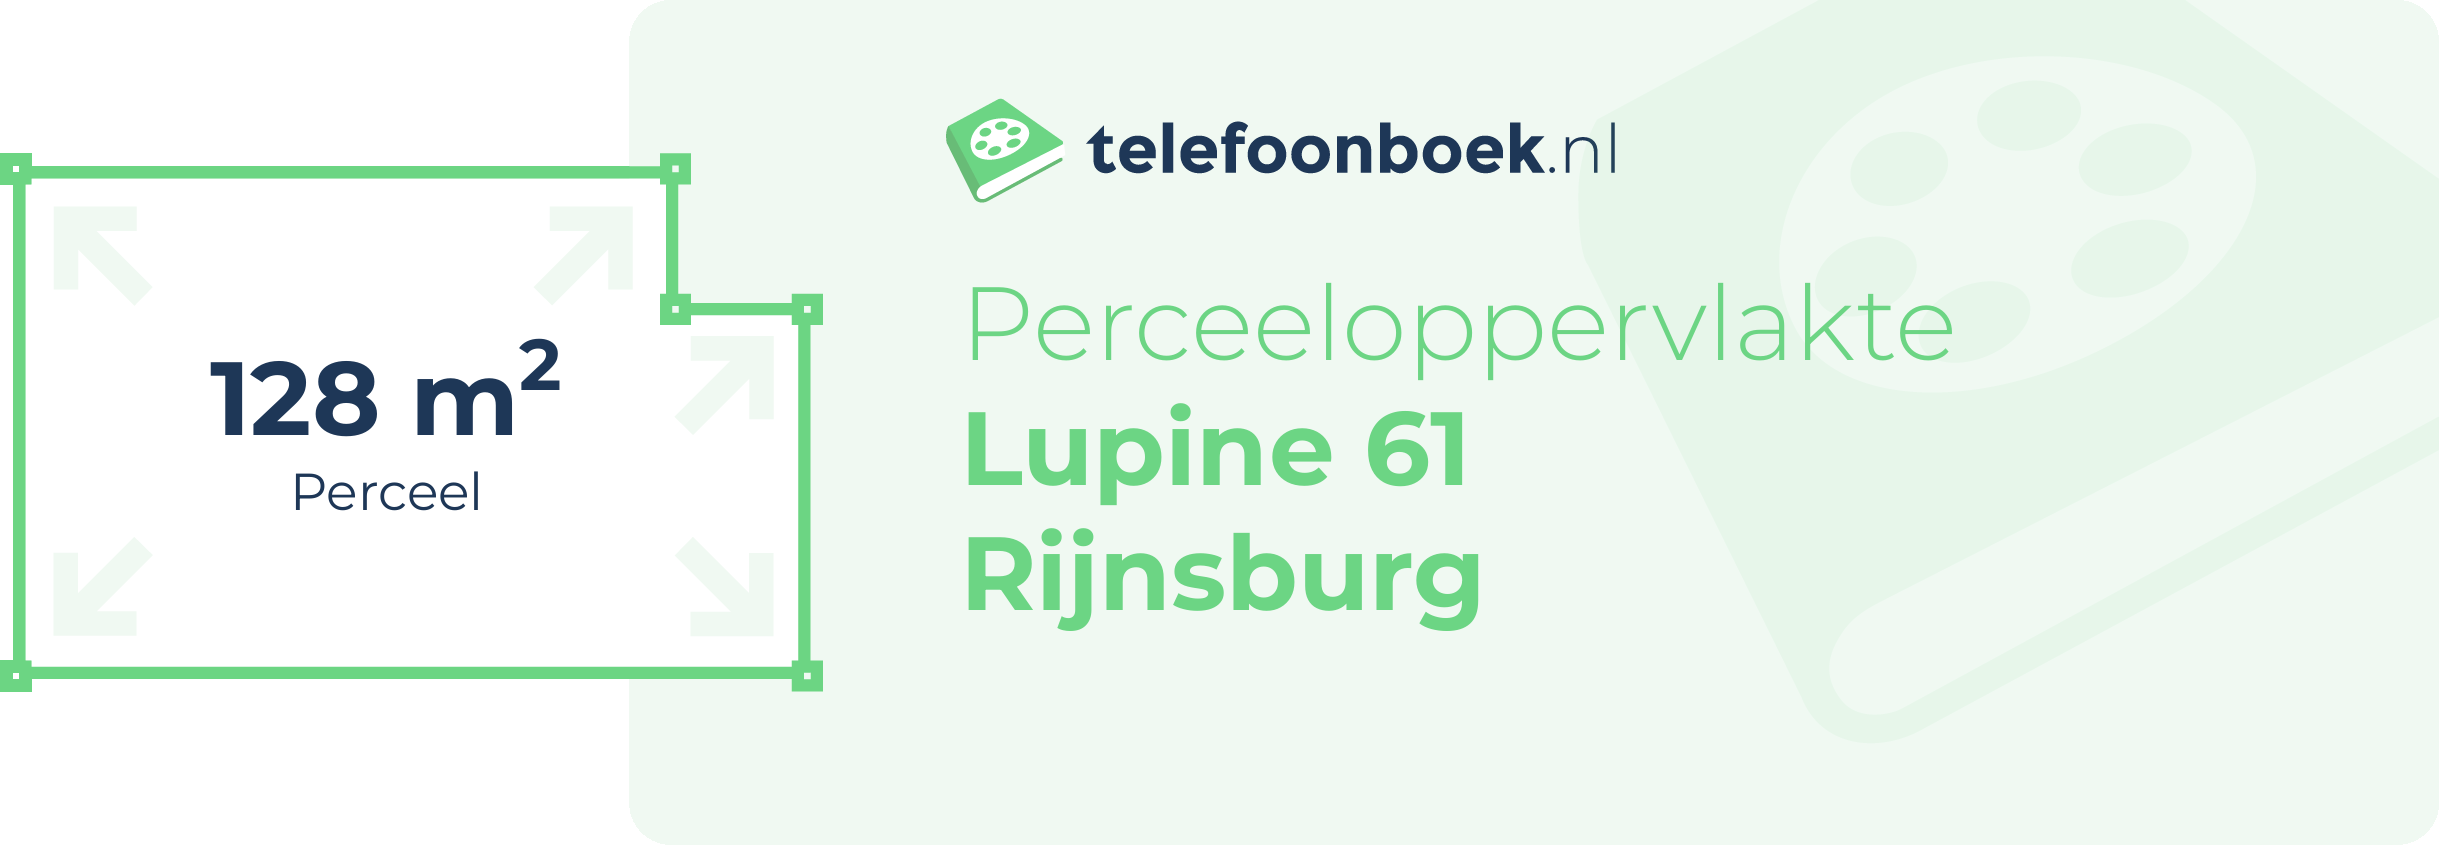 Perceeloppervlakte Lupine 61 Rijnsburg